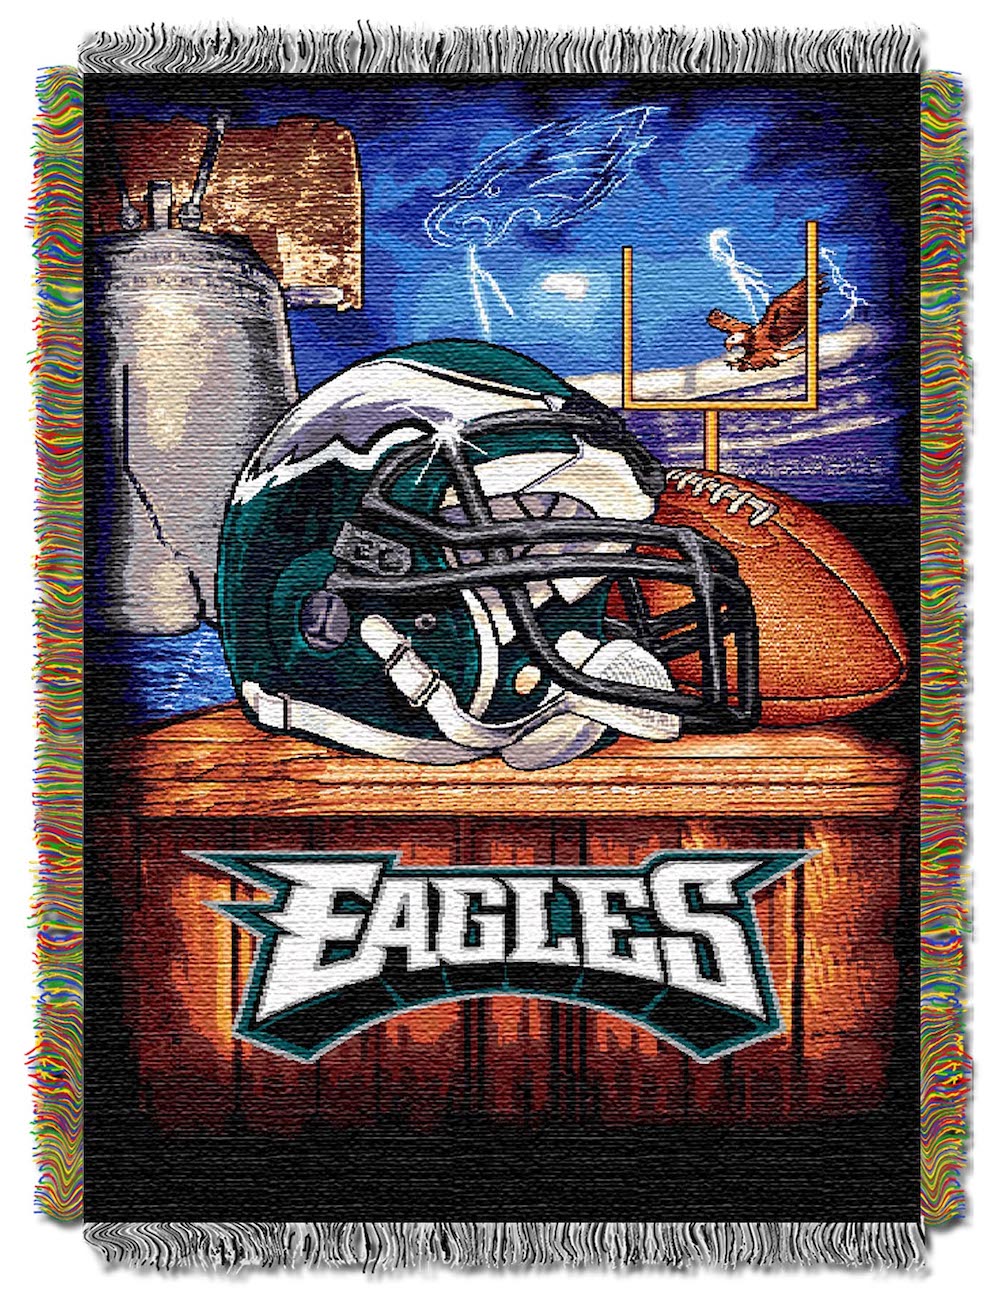 Philadelphia Eagles Home Field Advantage Series Tapestry Blanket 48 x 60